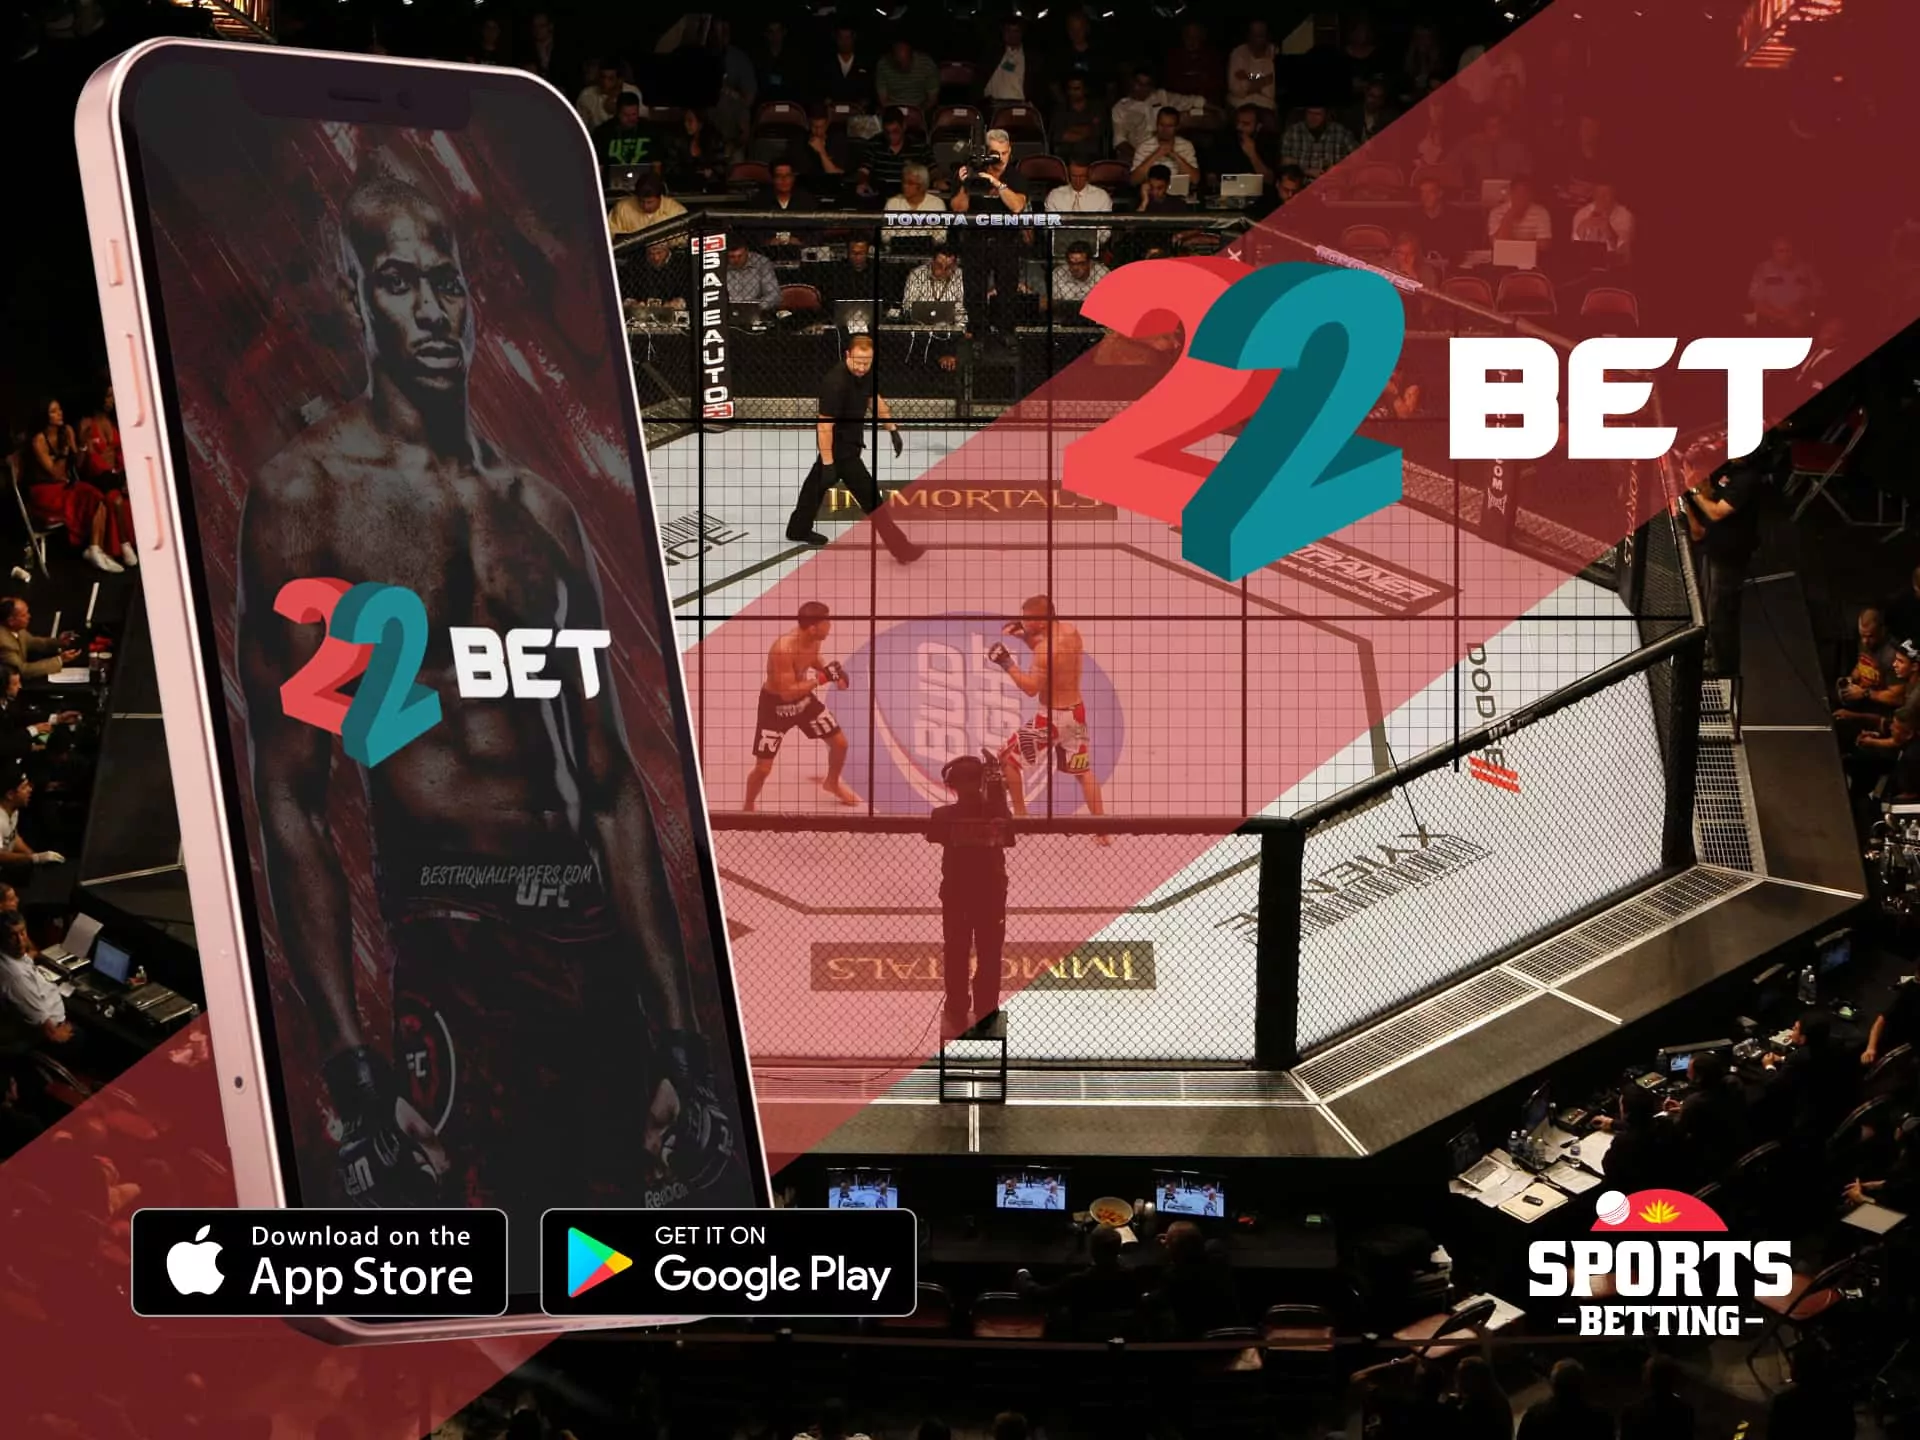 22BET UFC betting app with huge UFC betting odds.